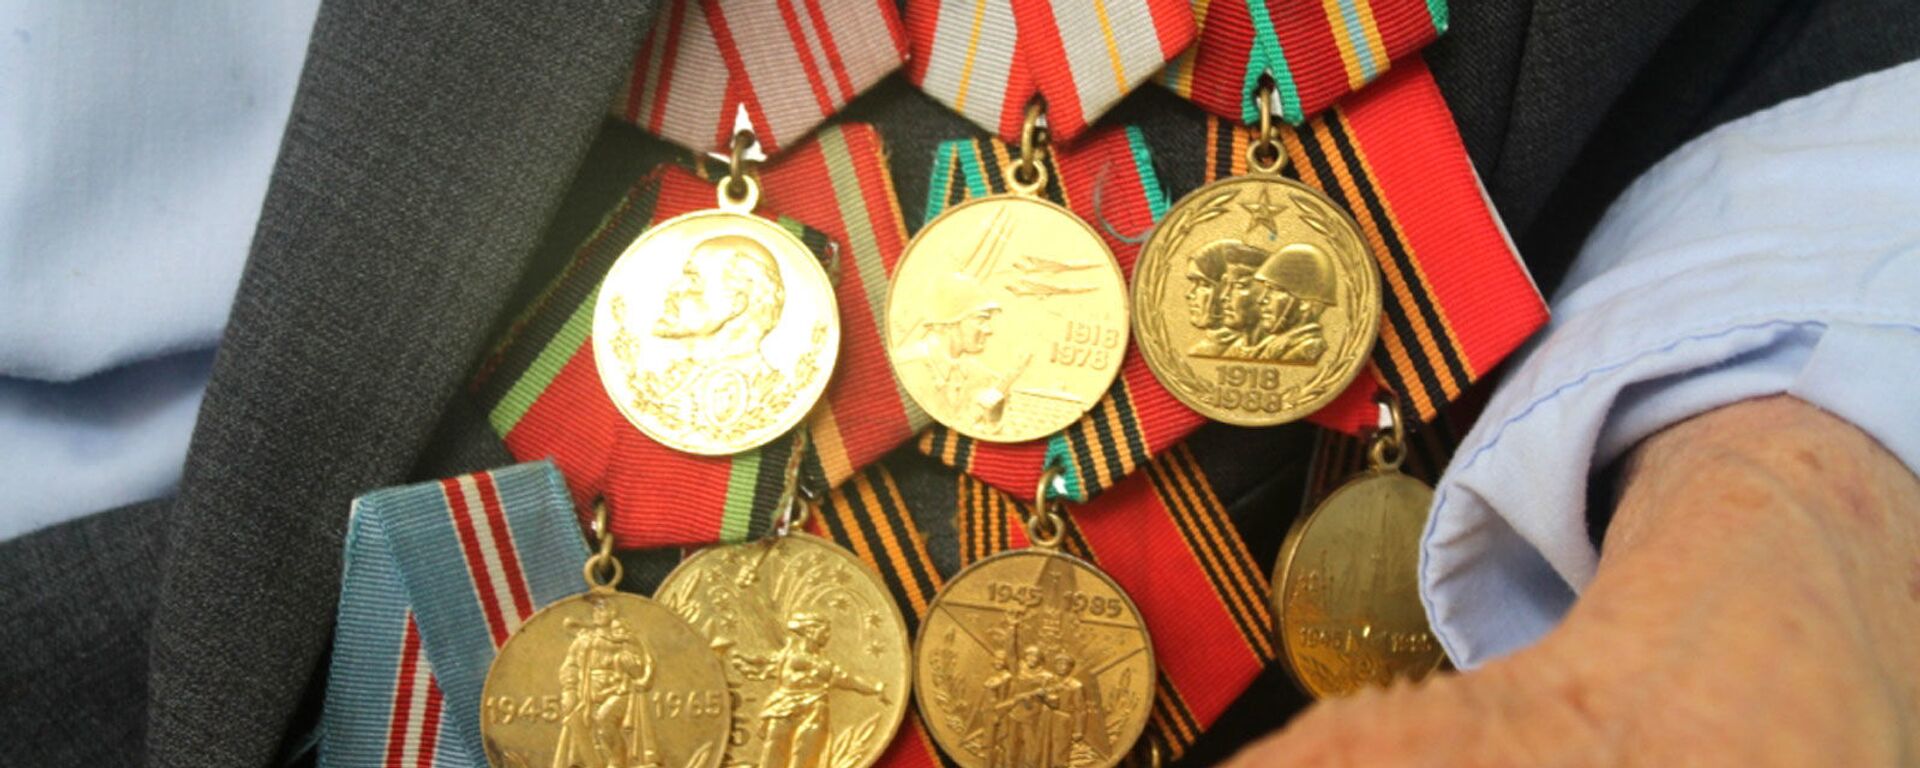 Медали ветерана ВОВ - Sputnik Таджикистан, 1920, 05.05.2020